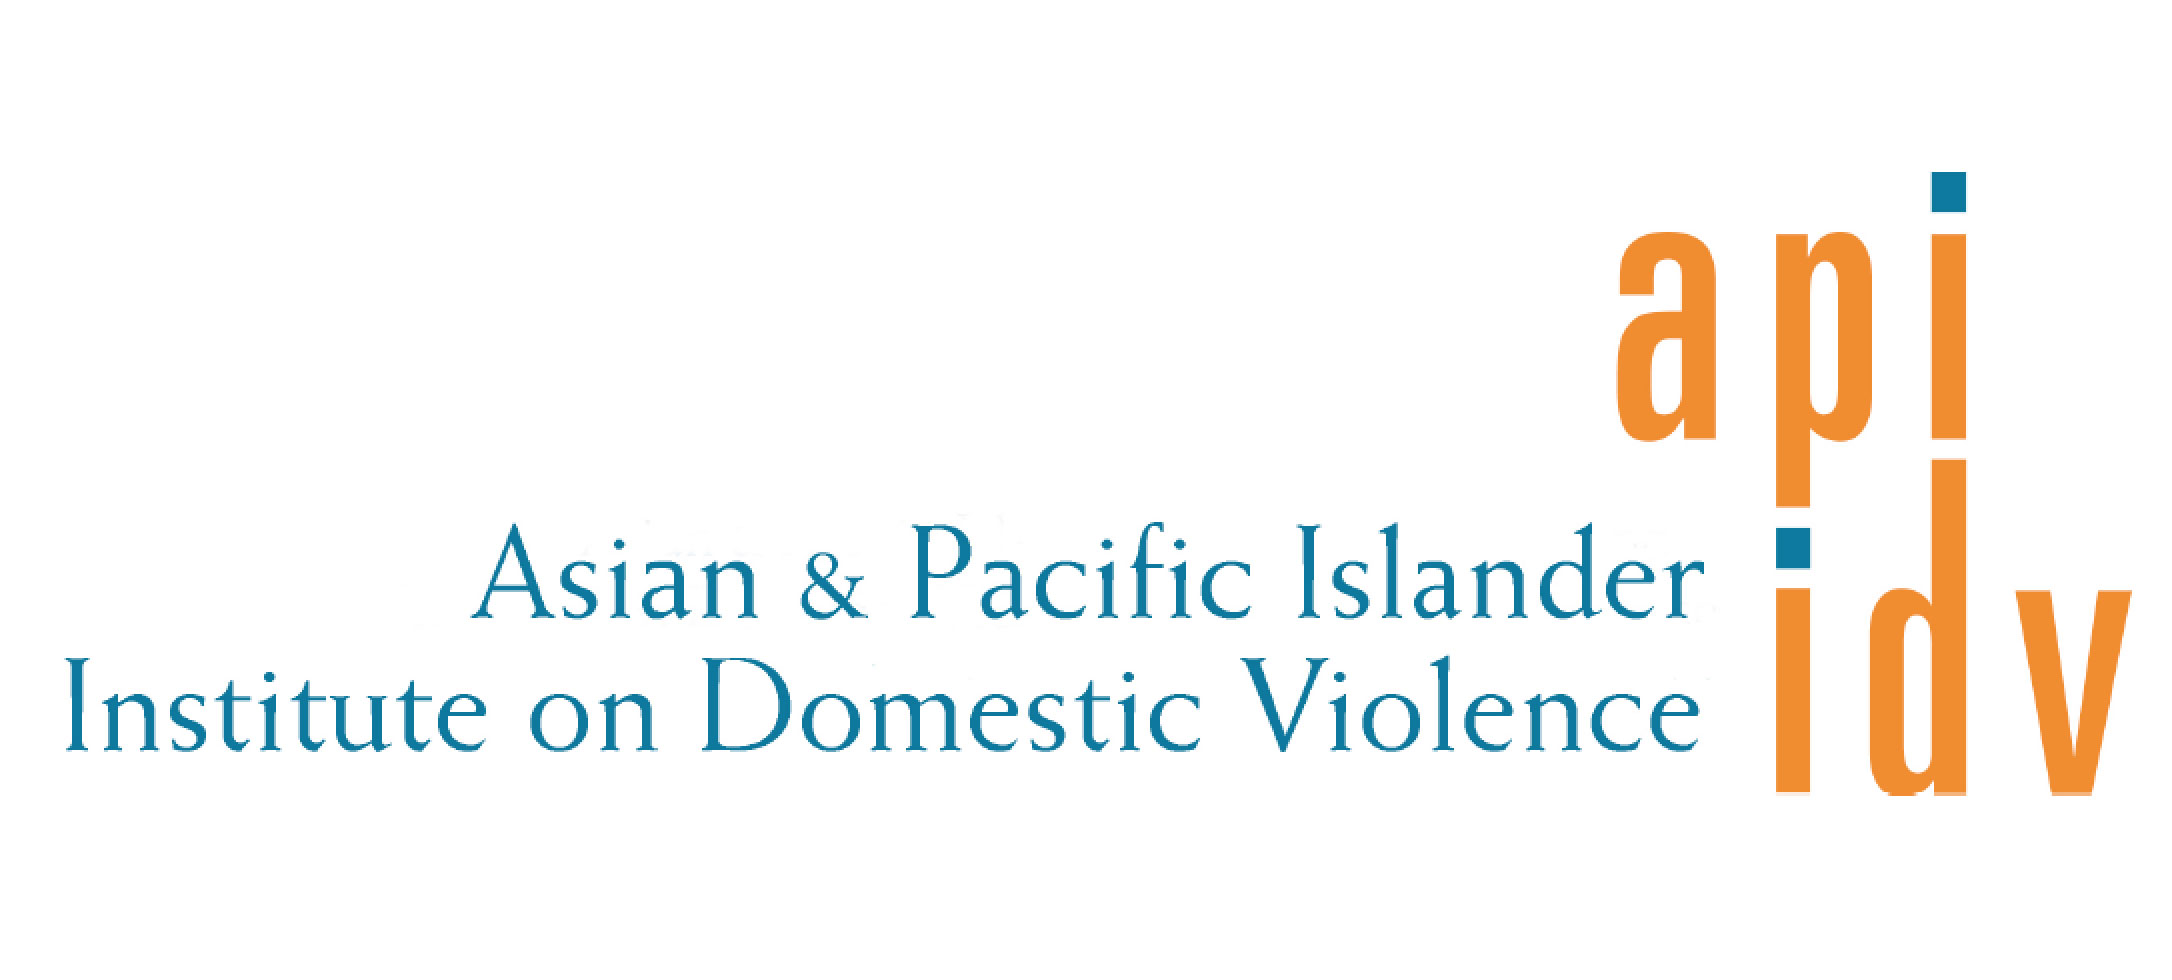 Asian & Pacific Islander Institute on Domestic Violence